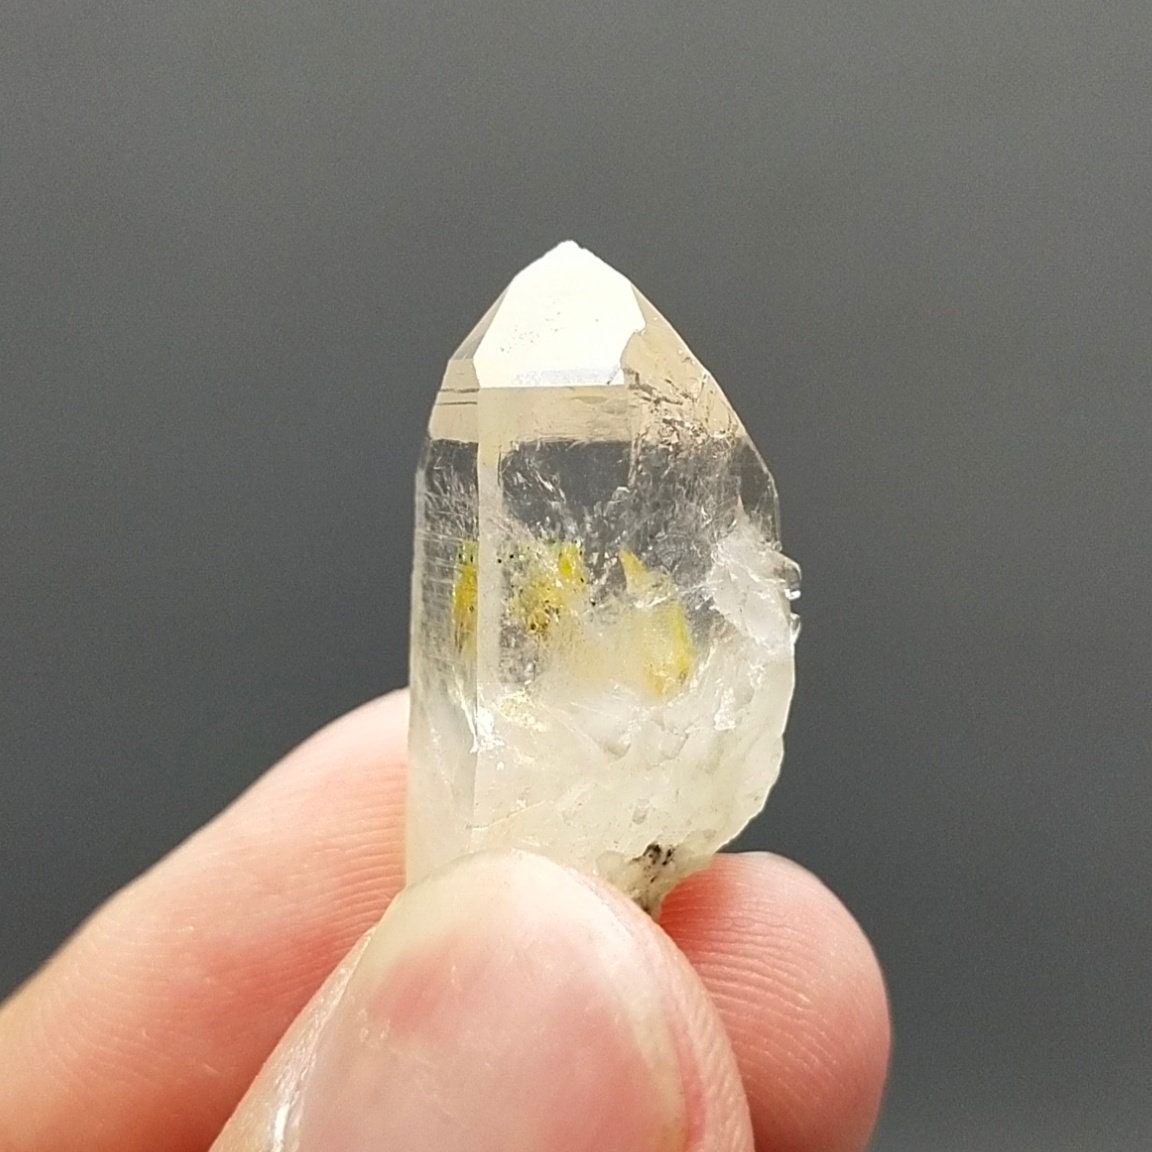 ARSAA GEMS AND MINERALSAesthetic fine quality beautiful UV reactive petroleum quartz crystal from Balochistan Pakistan, weight 6.8 grams - Premium  from ARSAA GEMS AND MINERALS - Just $120.00! Shop now at ARSAA GEMS AND MINERALS